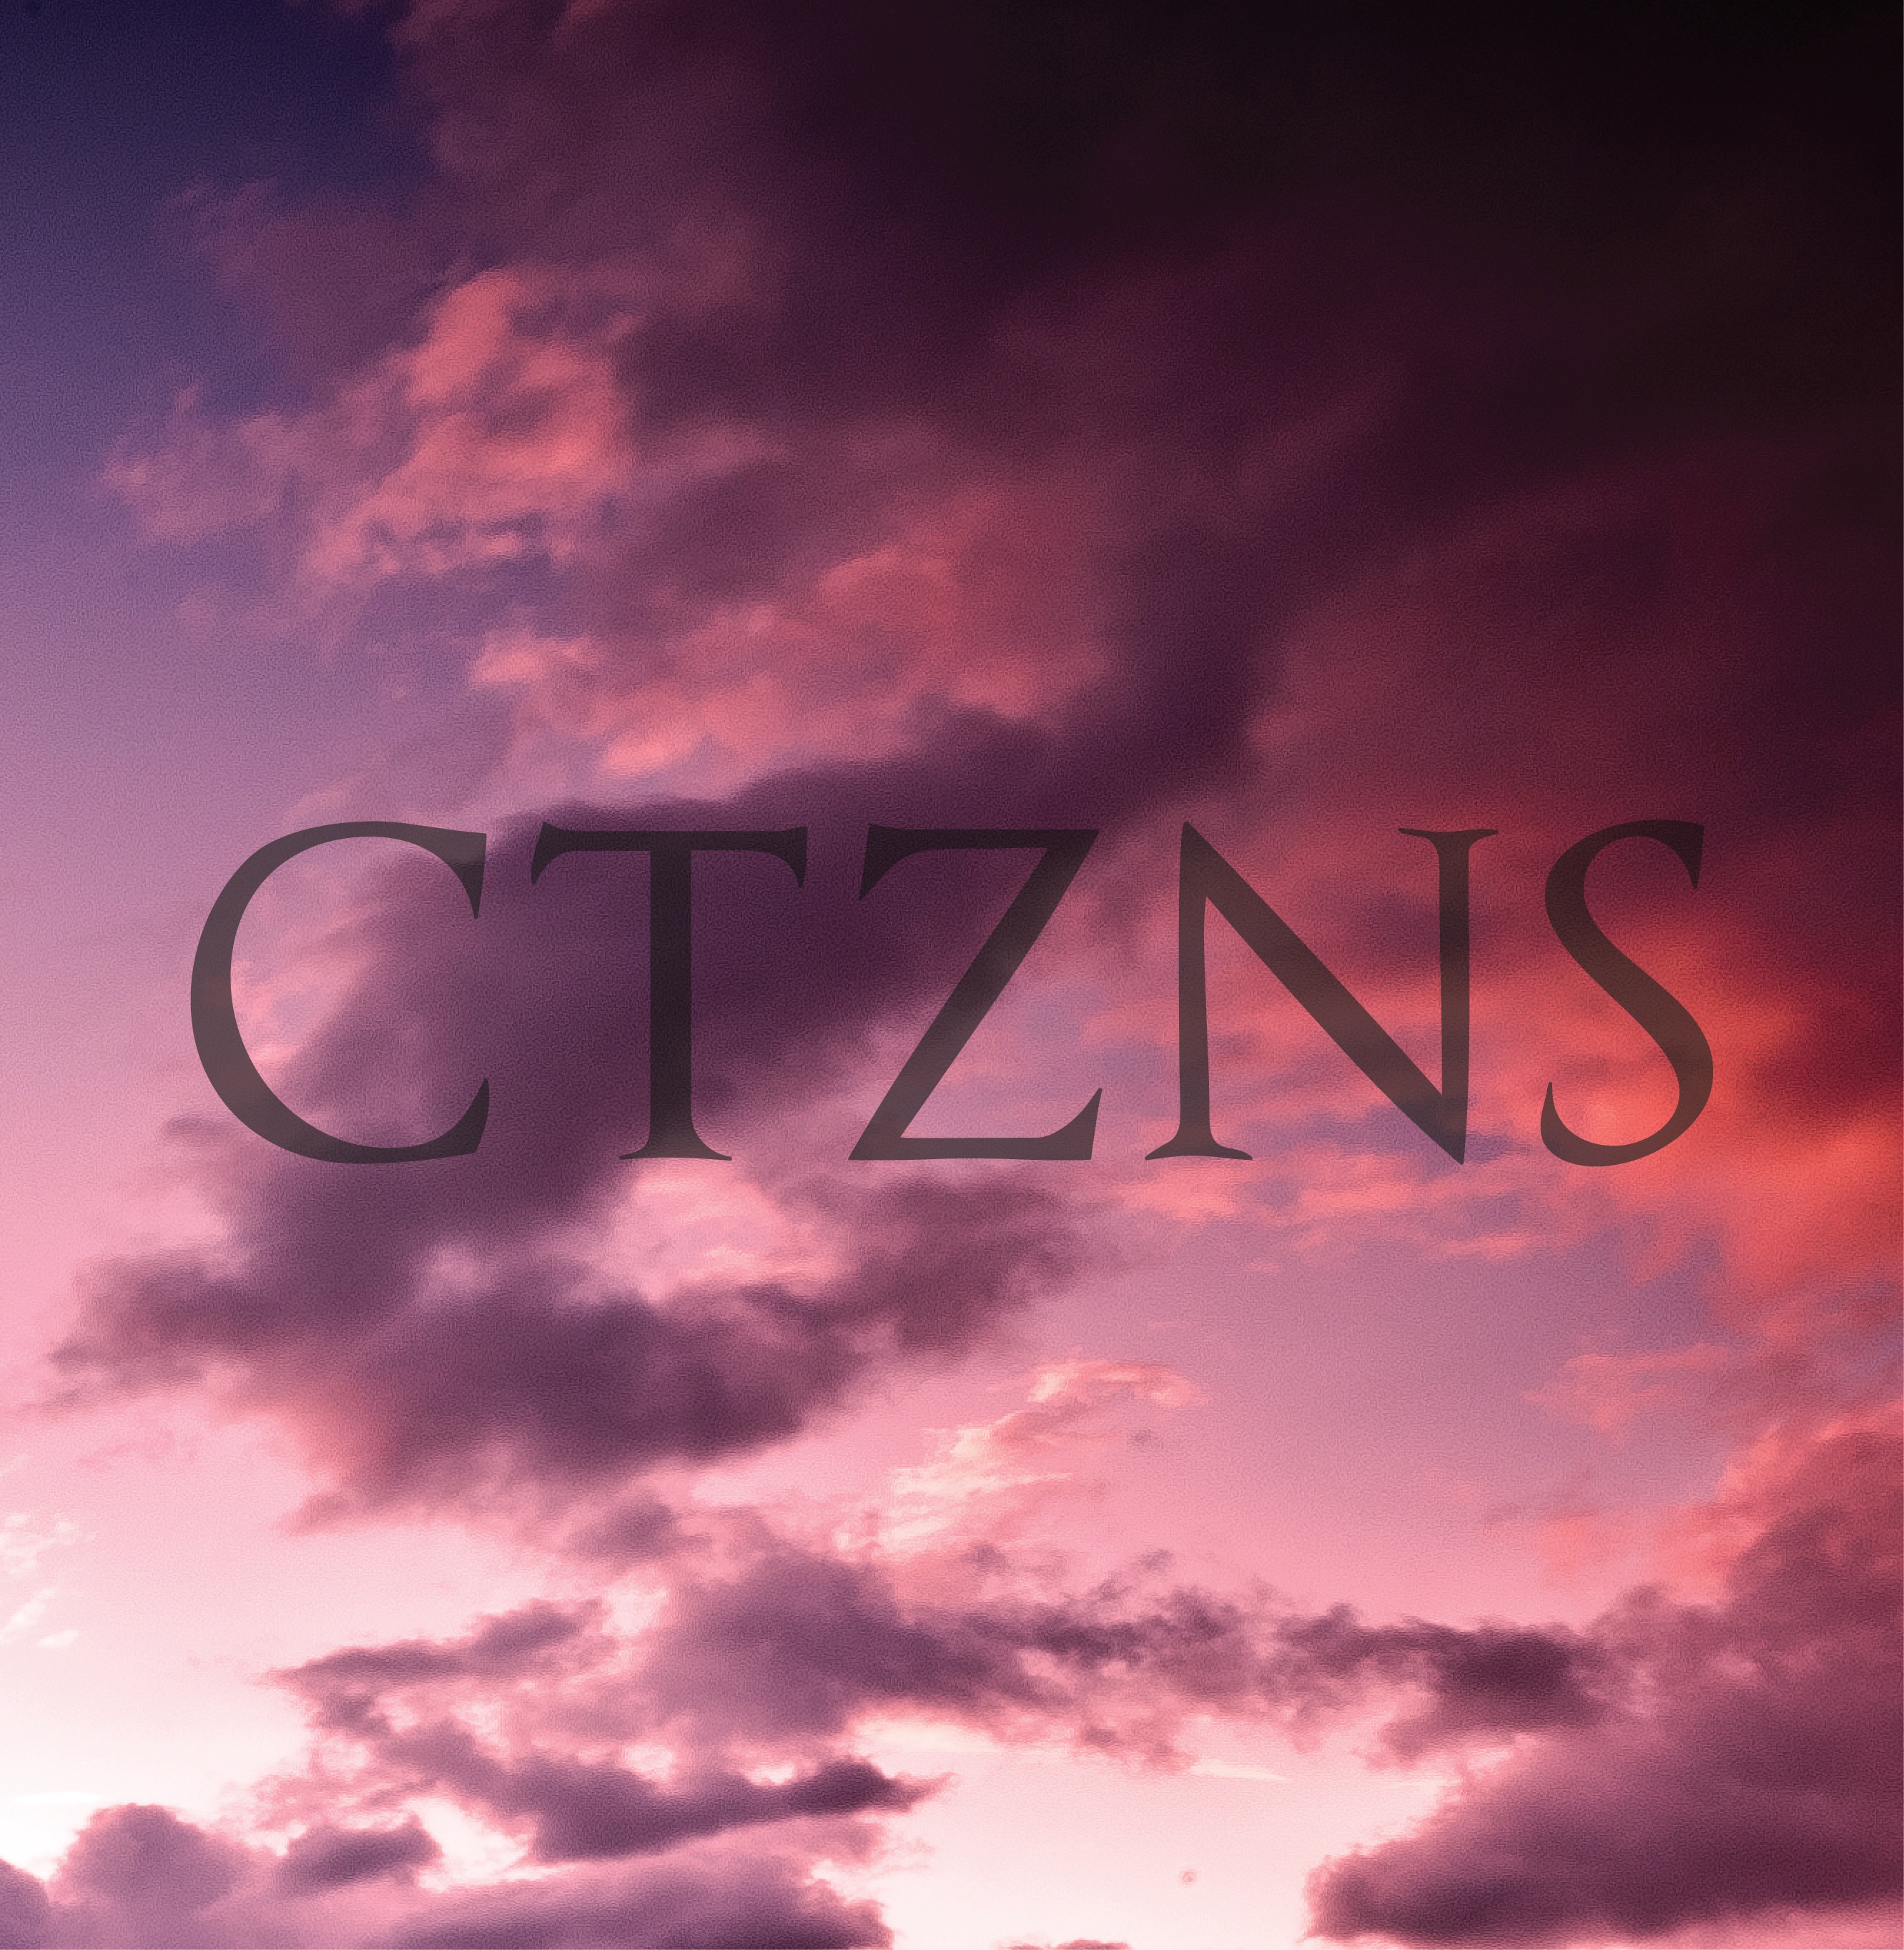 Citizens - CTZNS